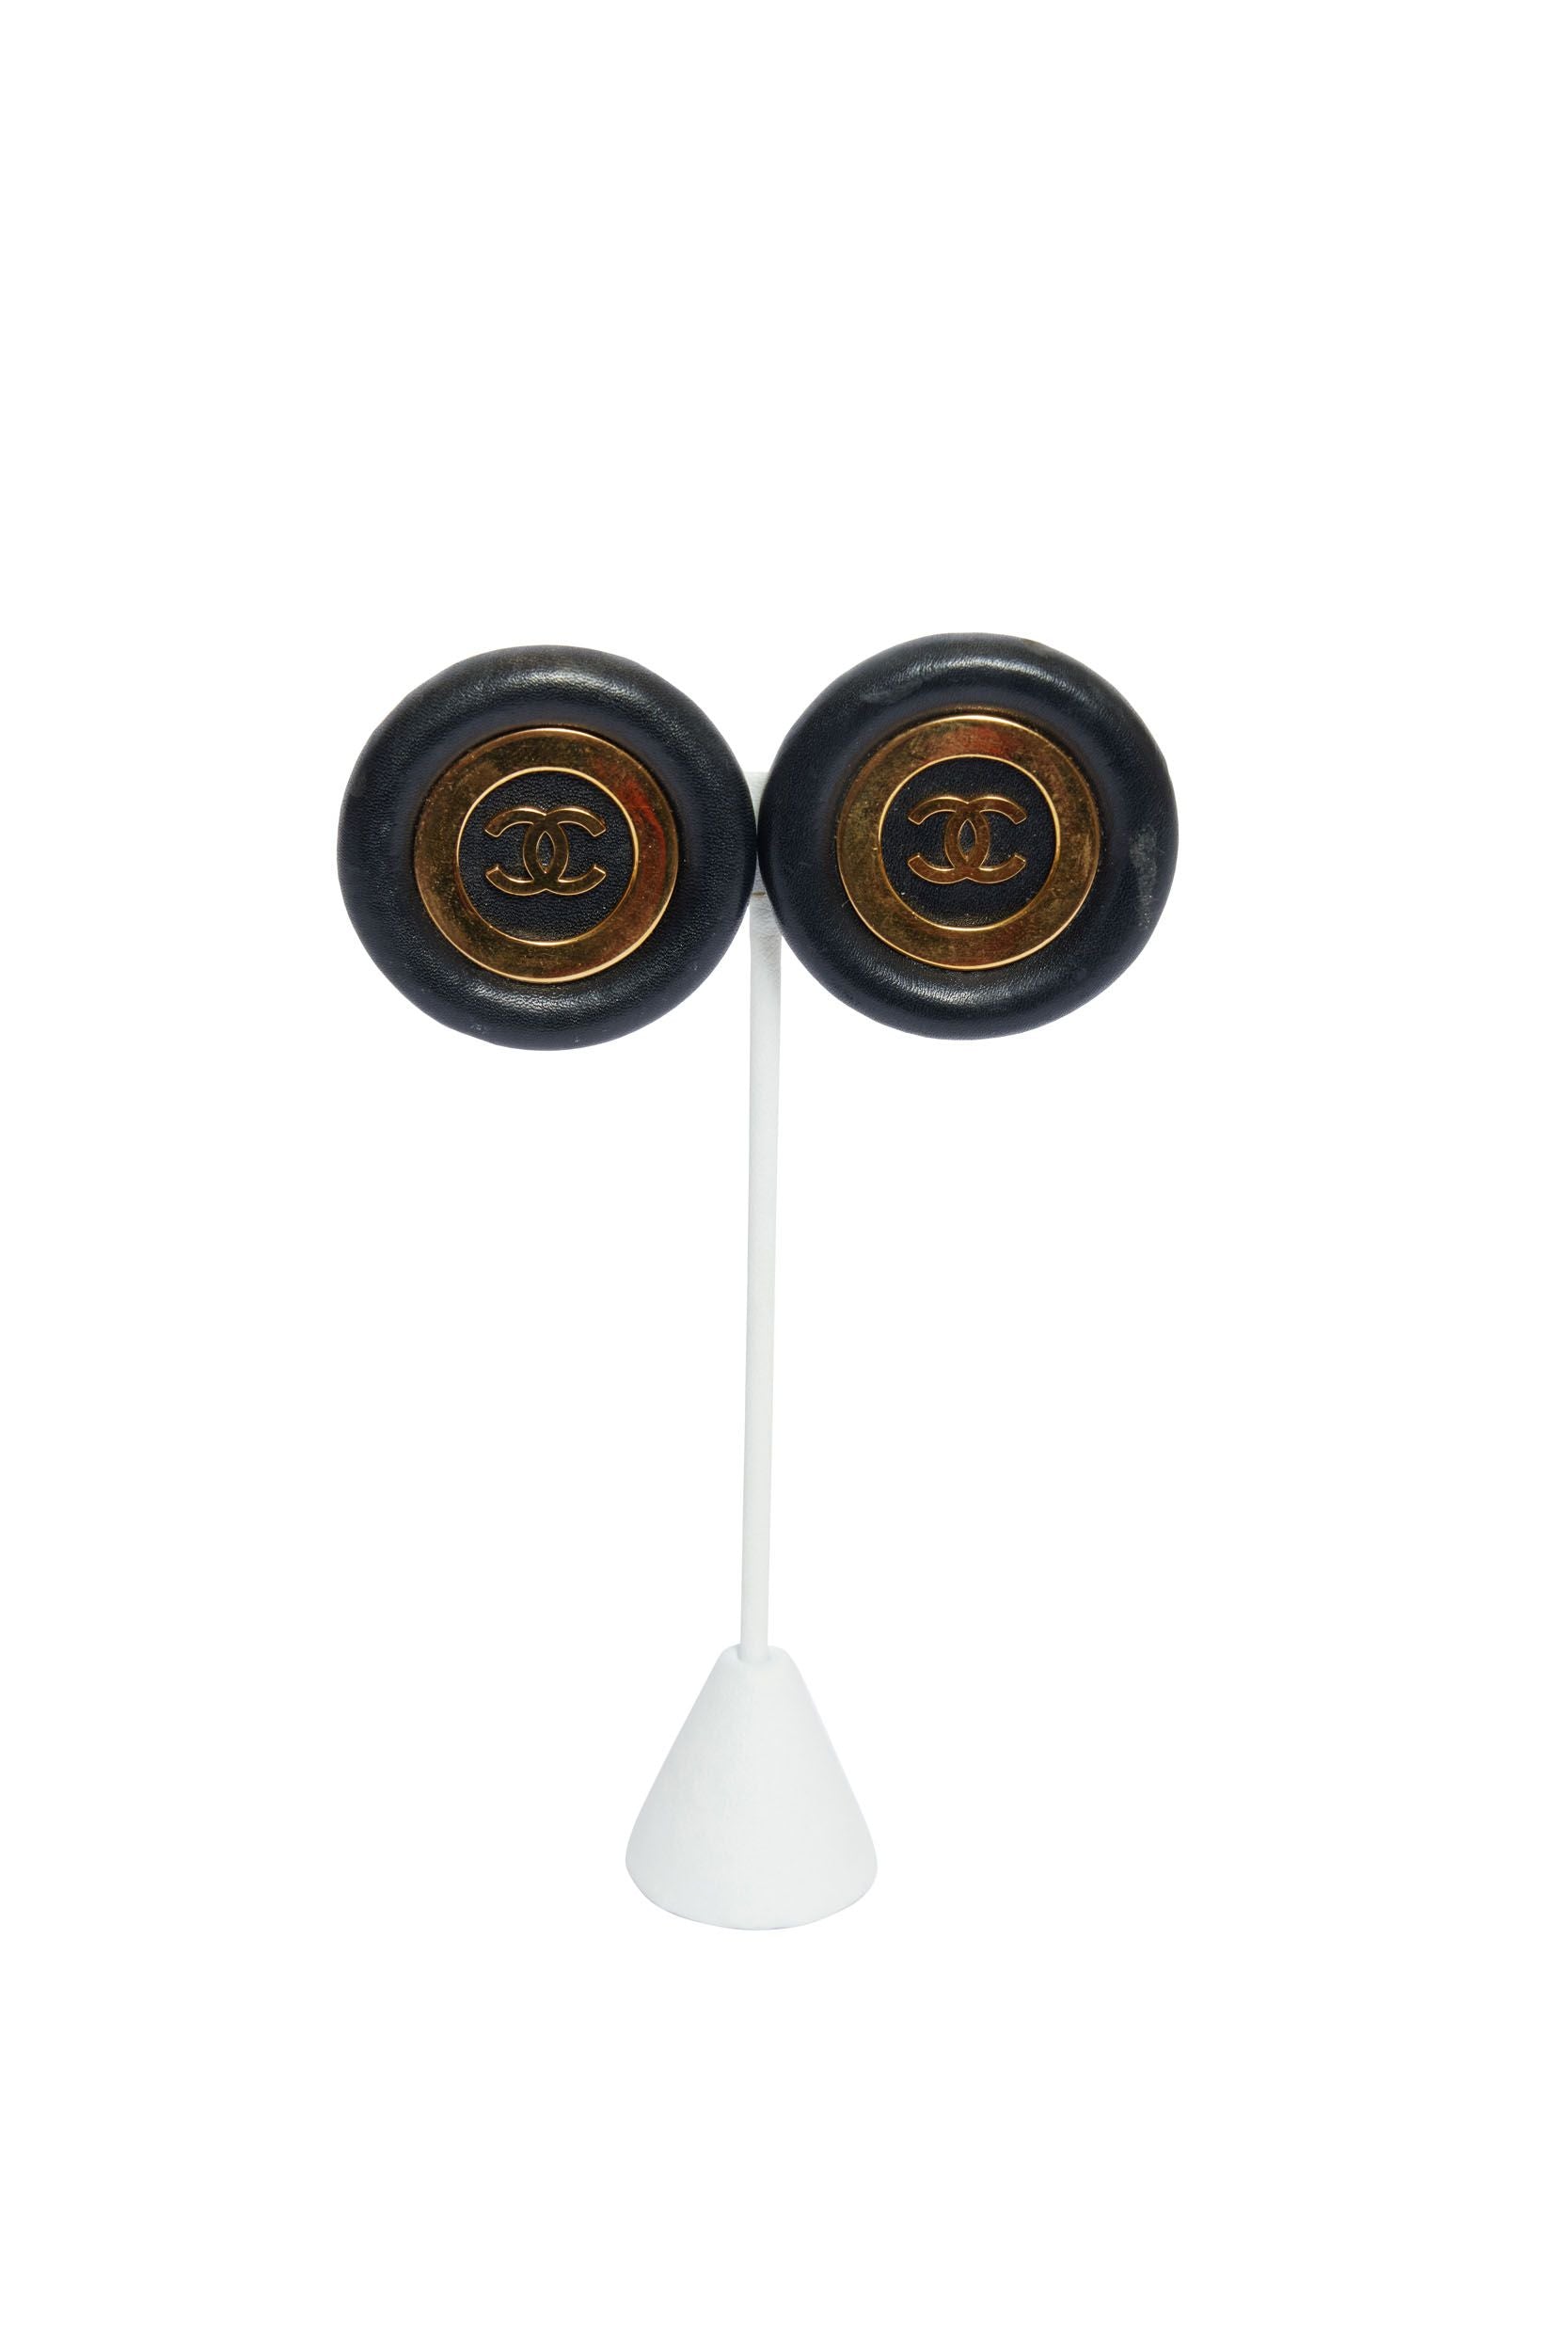 Chanel Cc Button Motif Earrings Gold Black Clip On 94p